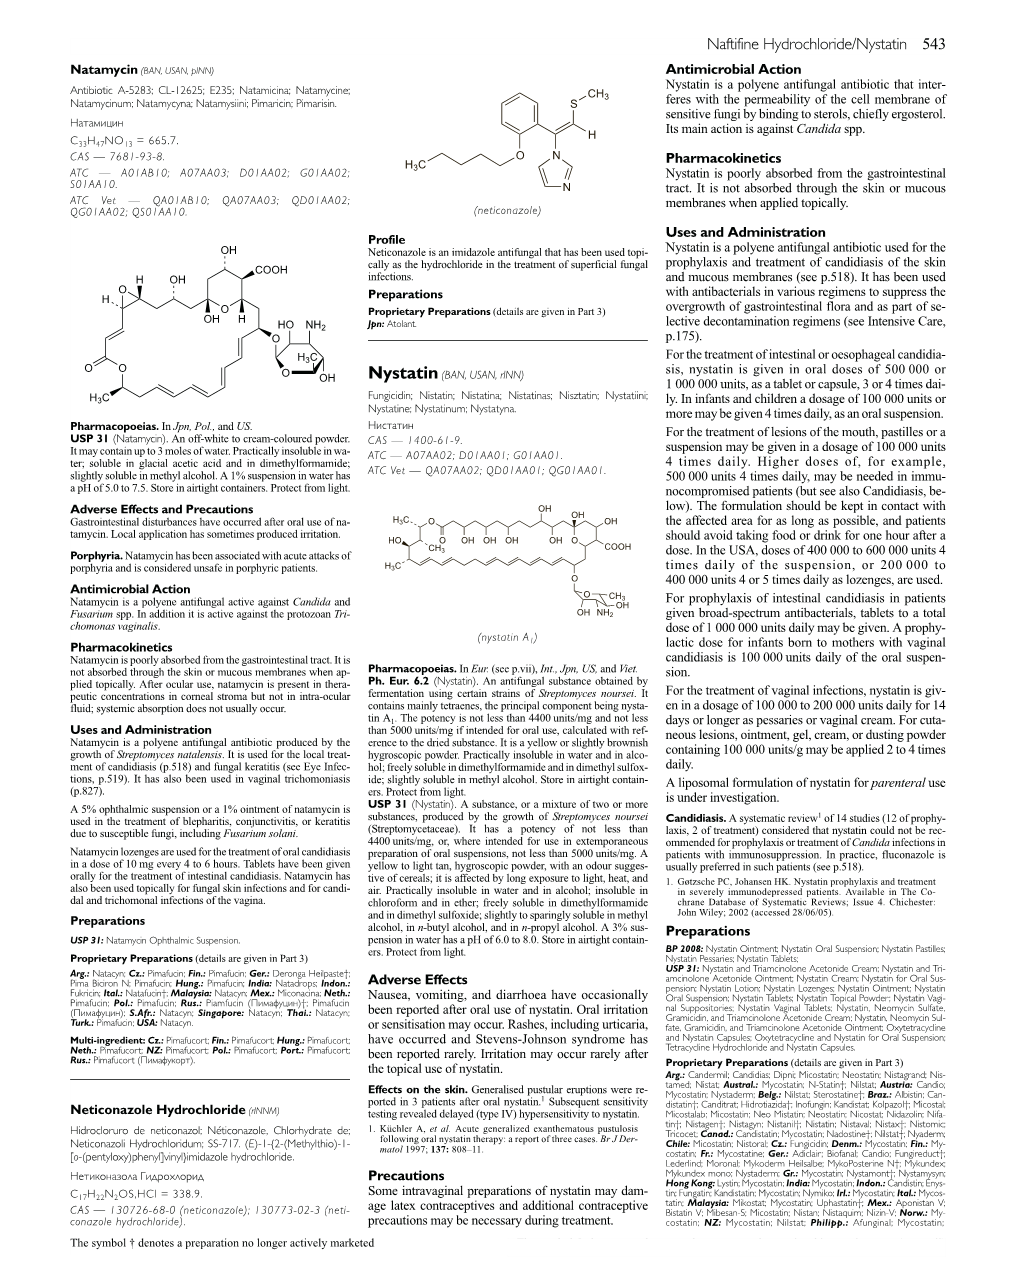 Neticonazole Hydrochloride (Rinnm) Testing Revealed Delayed (Type IV) Hypersensitivity to Nystatin